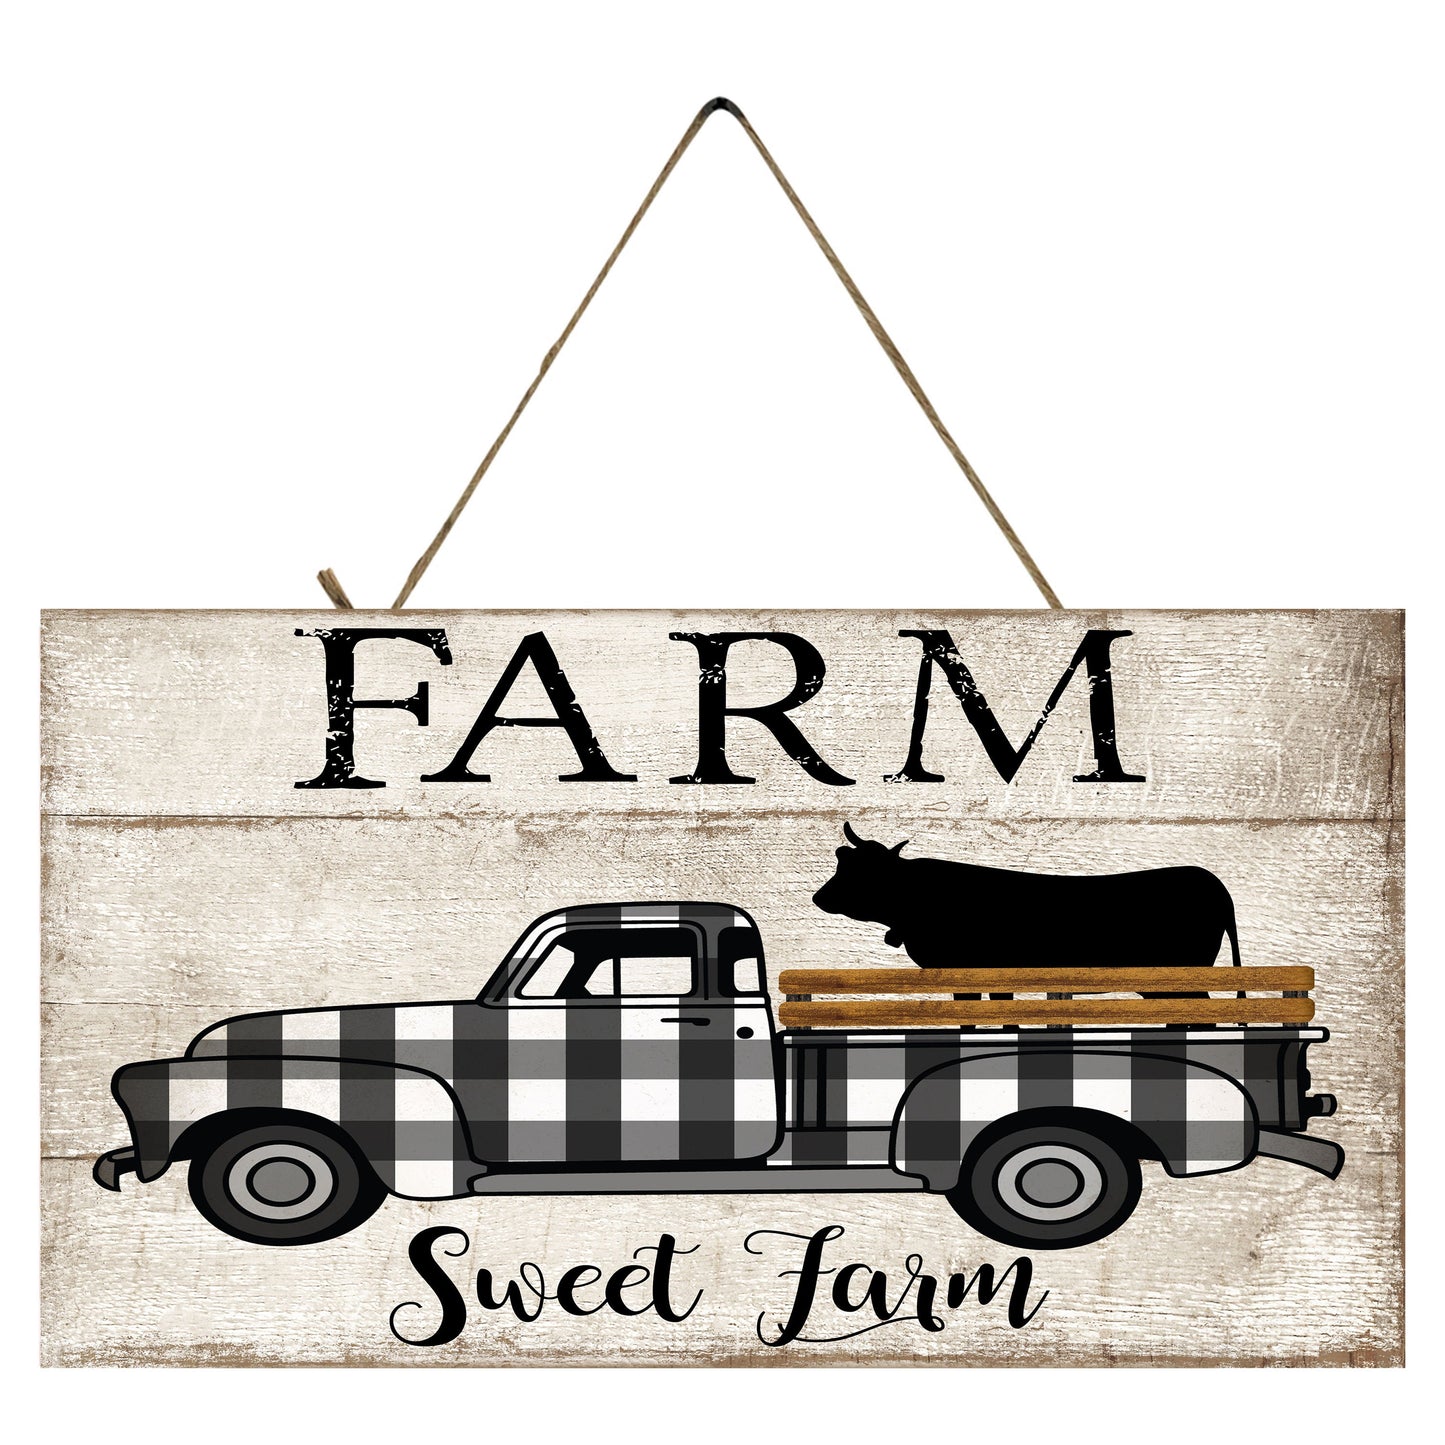 Farmhouse Black Plaid Farm Sweet Farm Truck Printed Handmade Wood Sign